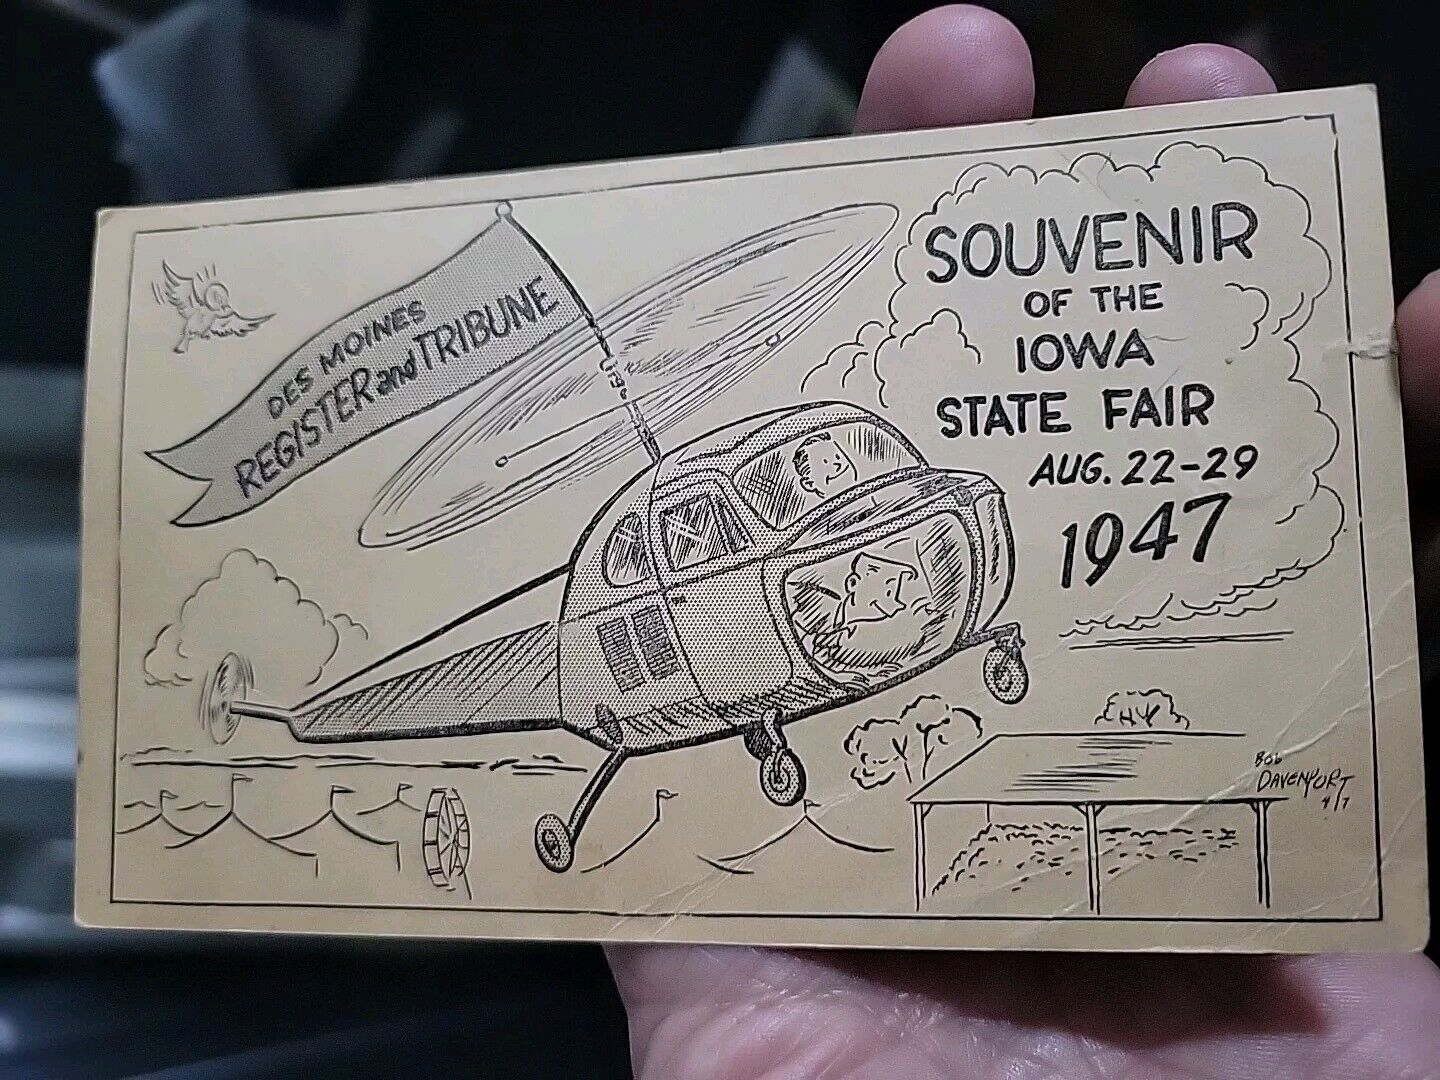 Iowa State Fair DES MOINES Newspaper Helicopter Postcard 1947 PetetheGreek a